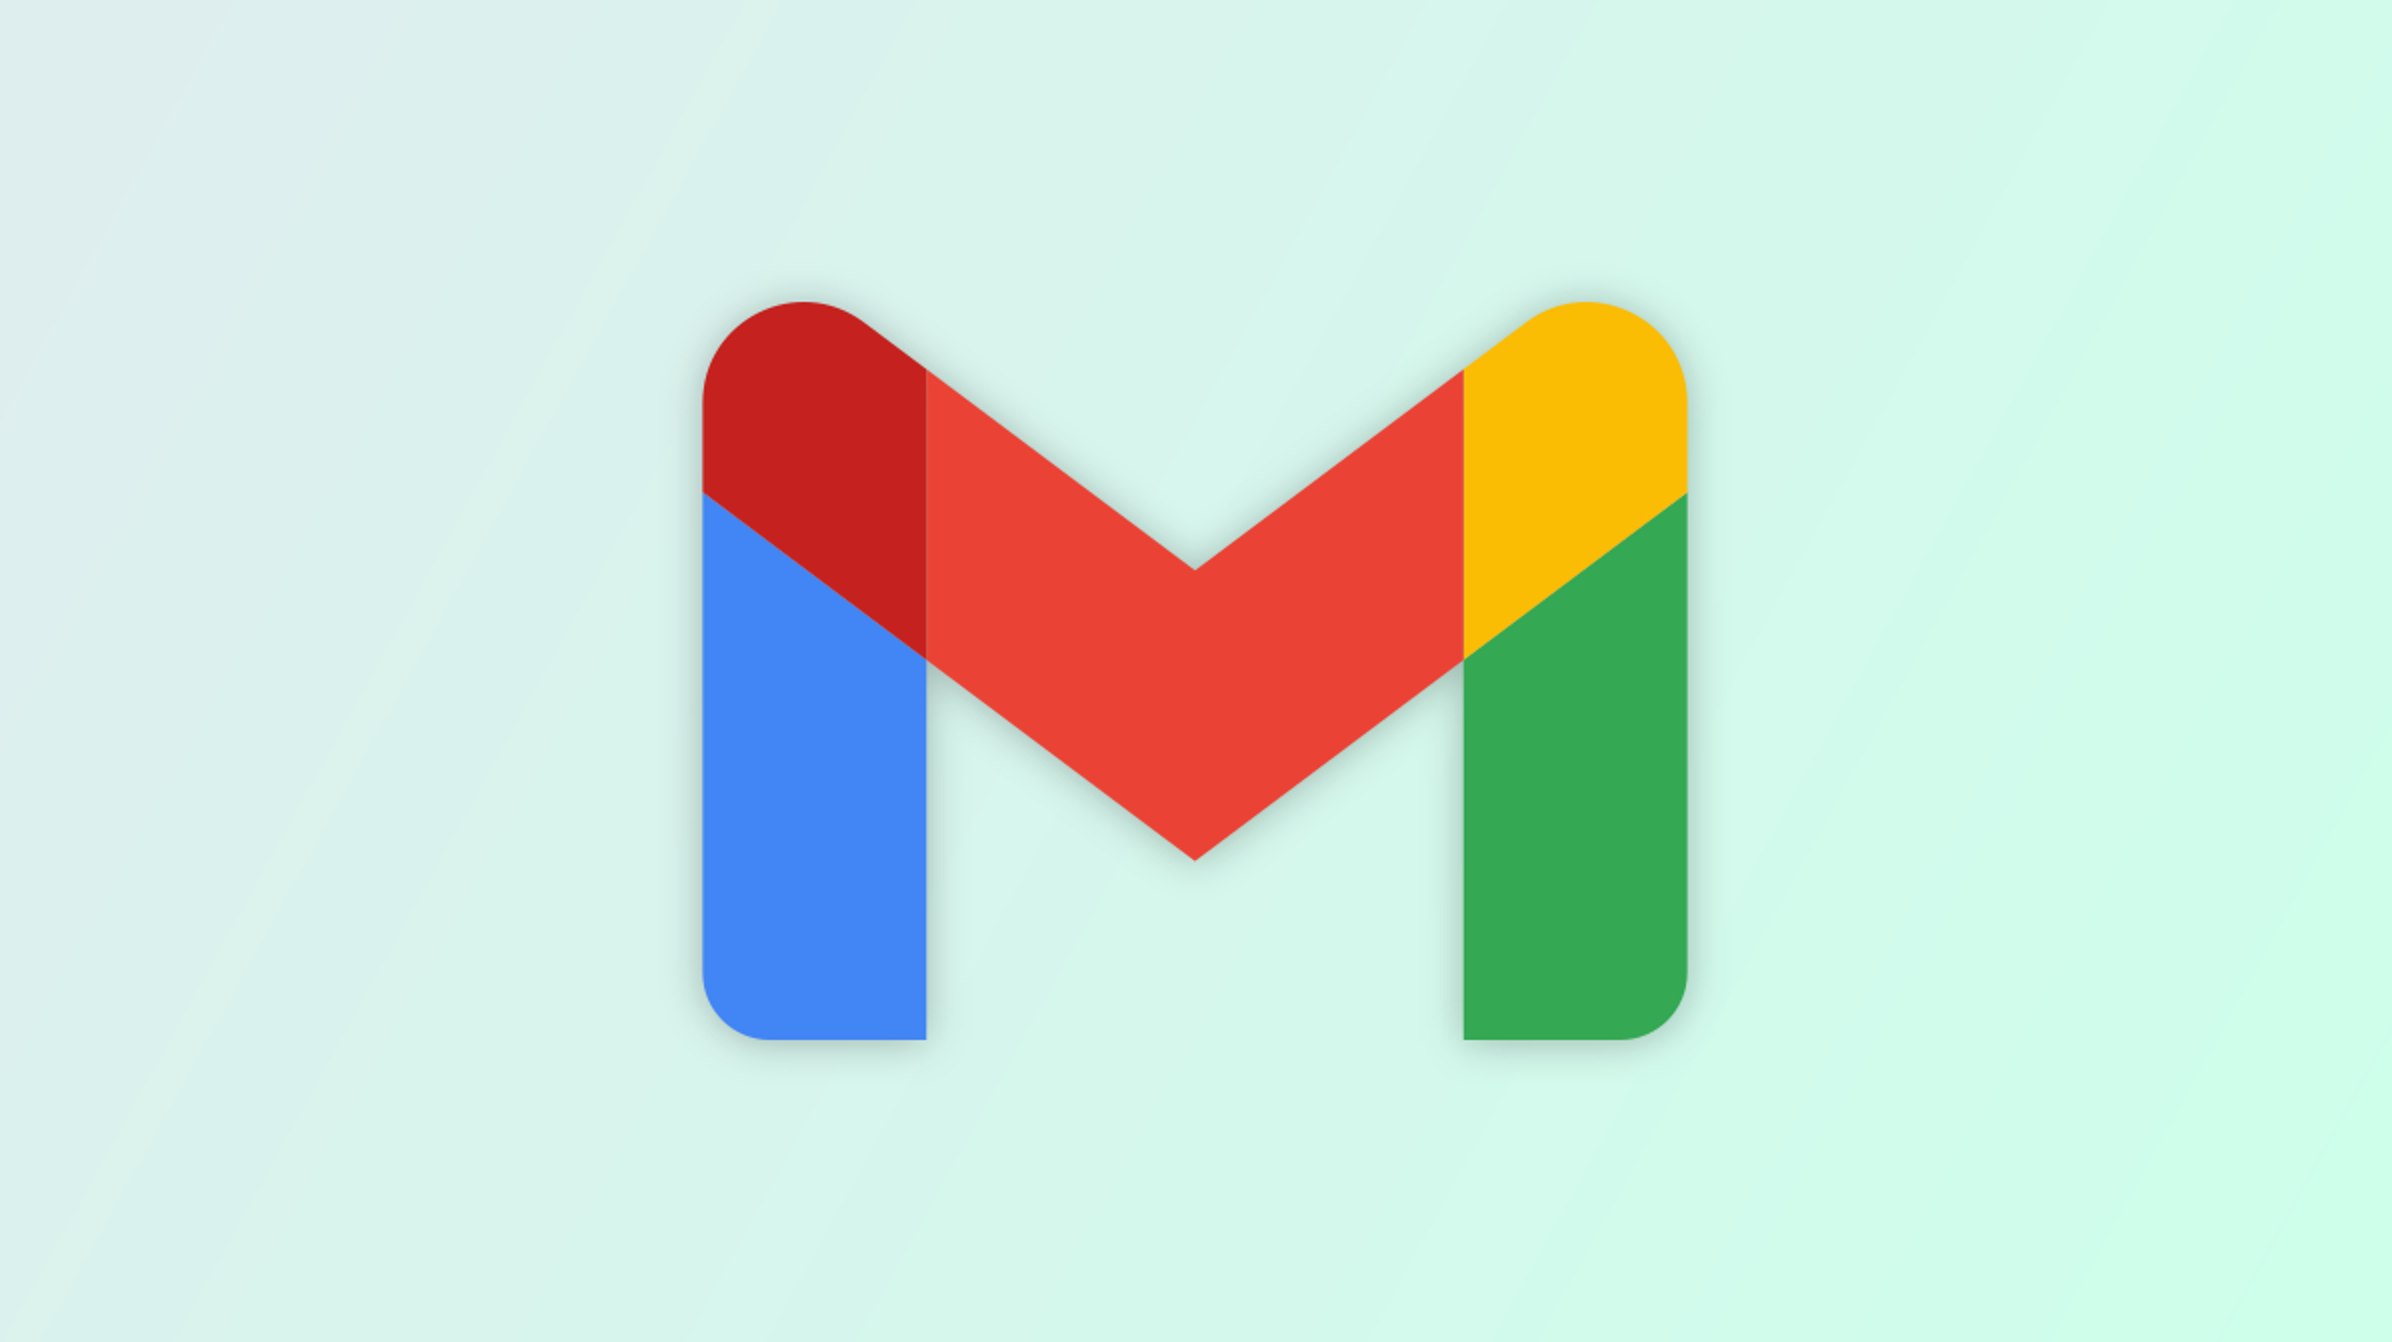 Gmail Domain